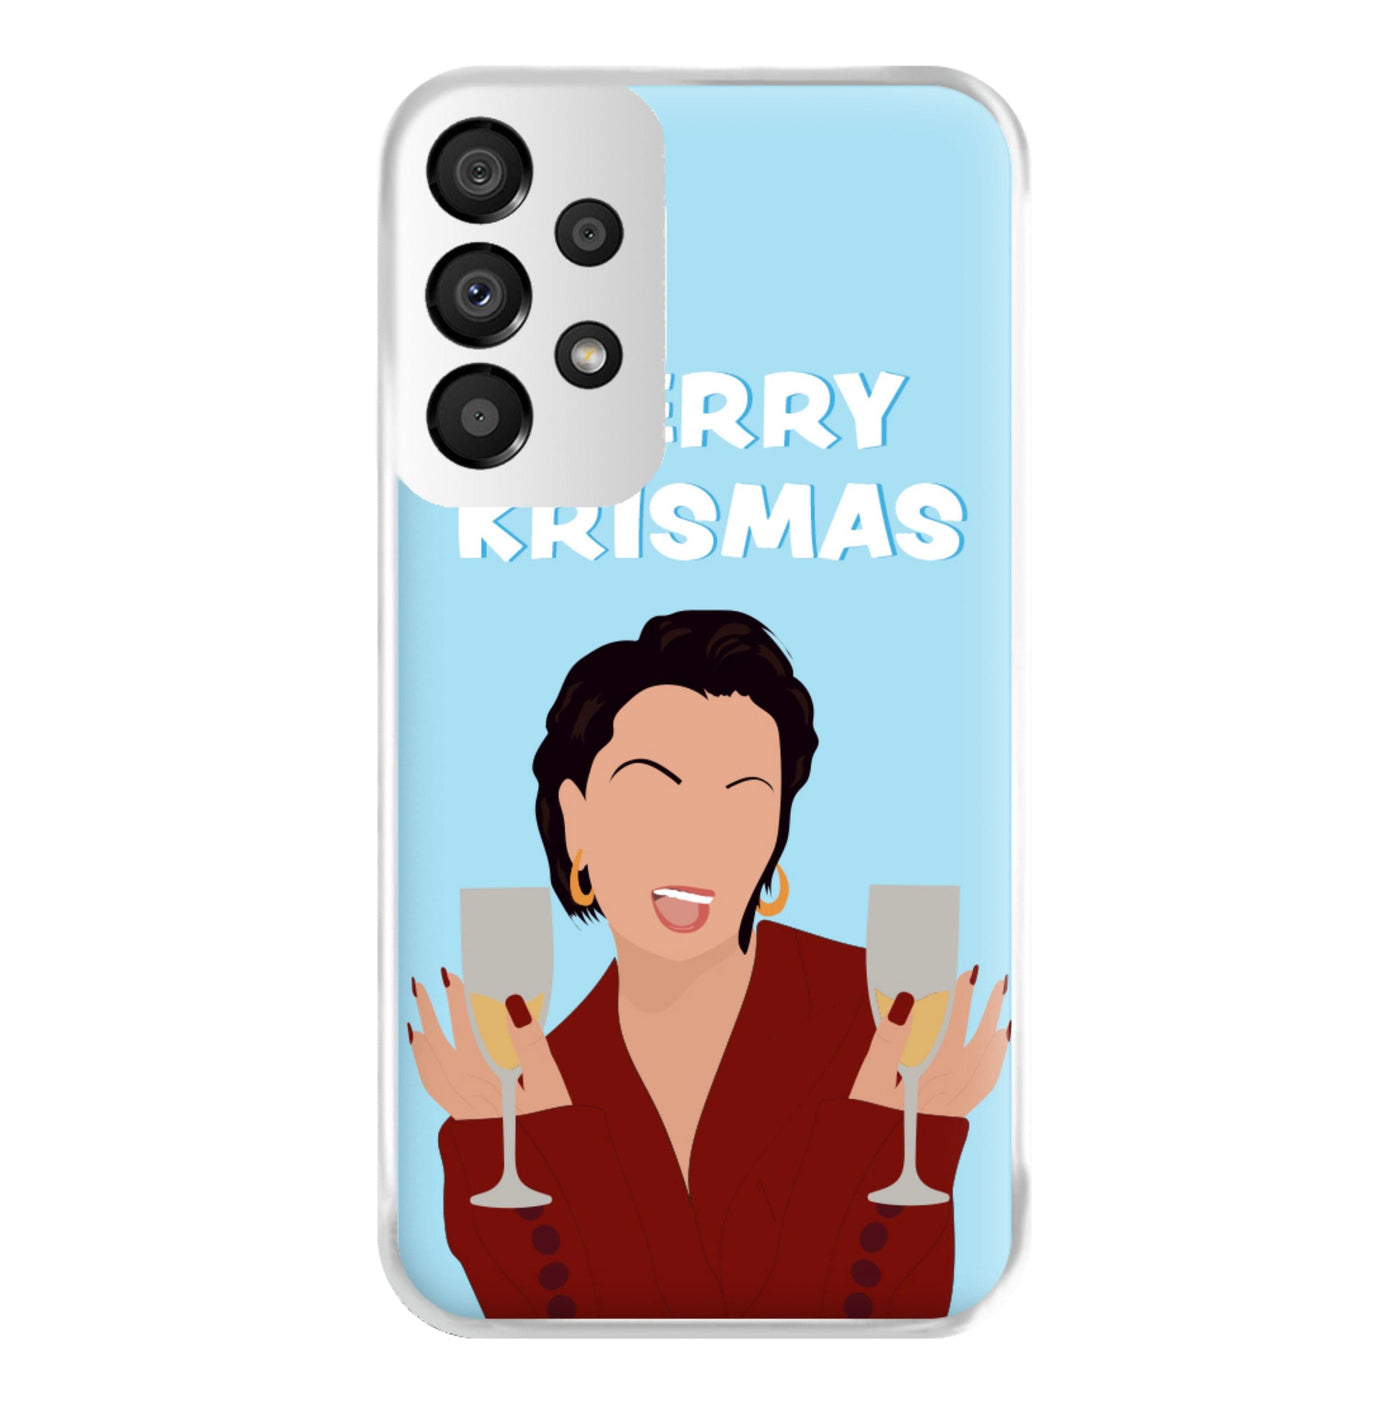 Merry Krismas - Kardashian Christmas Phone Case